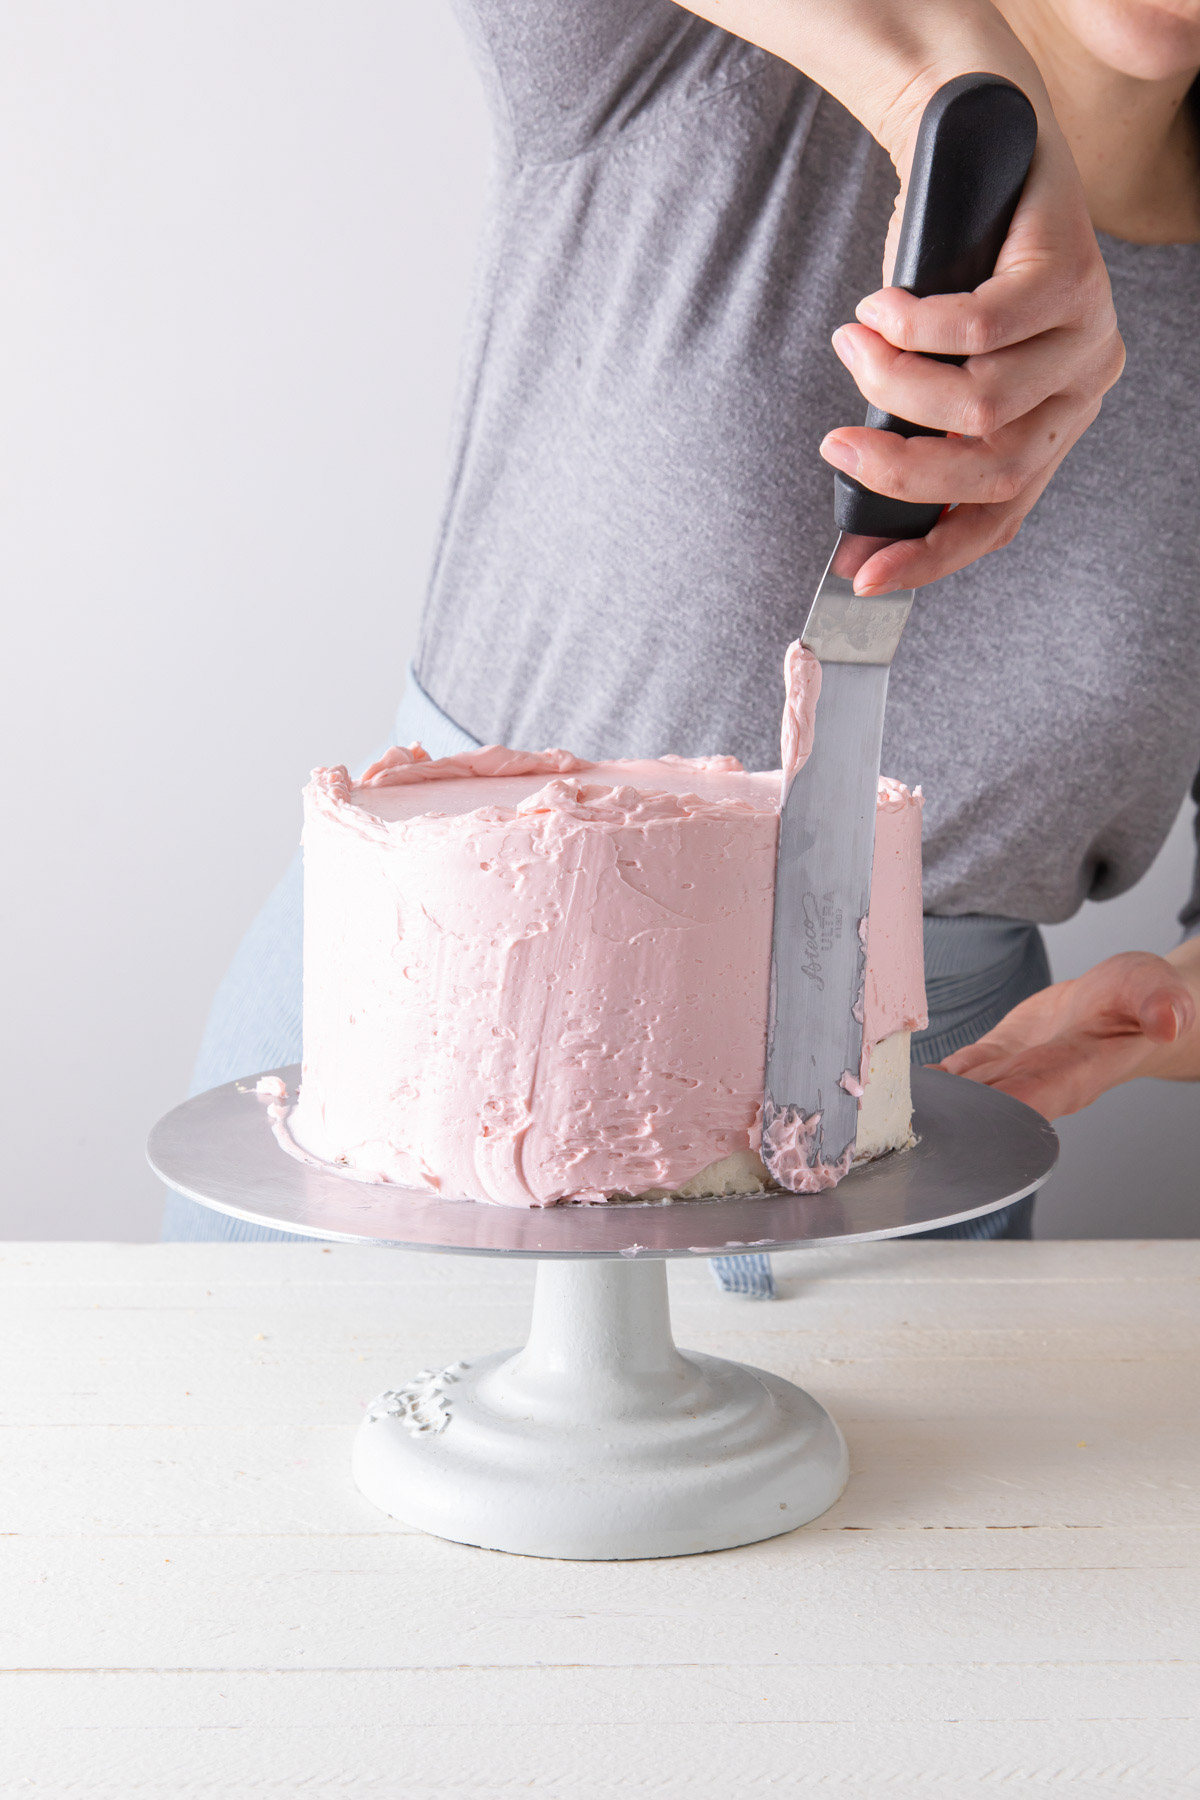 5 Steps to Add a Chocolate Drip to a Cake - Cake by Courtney